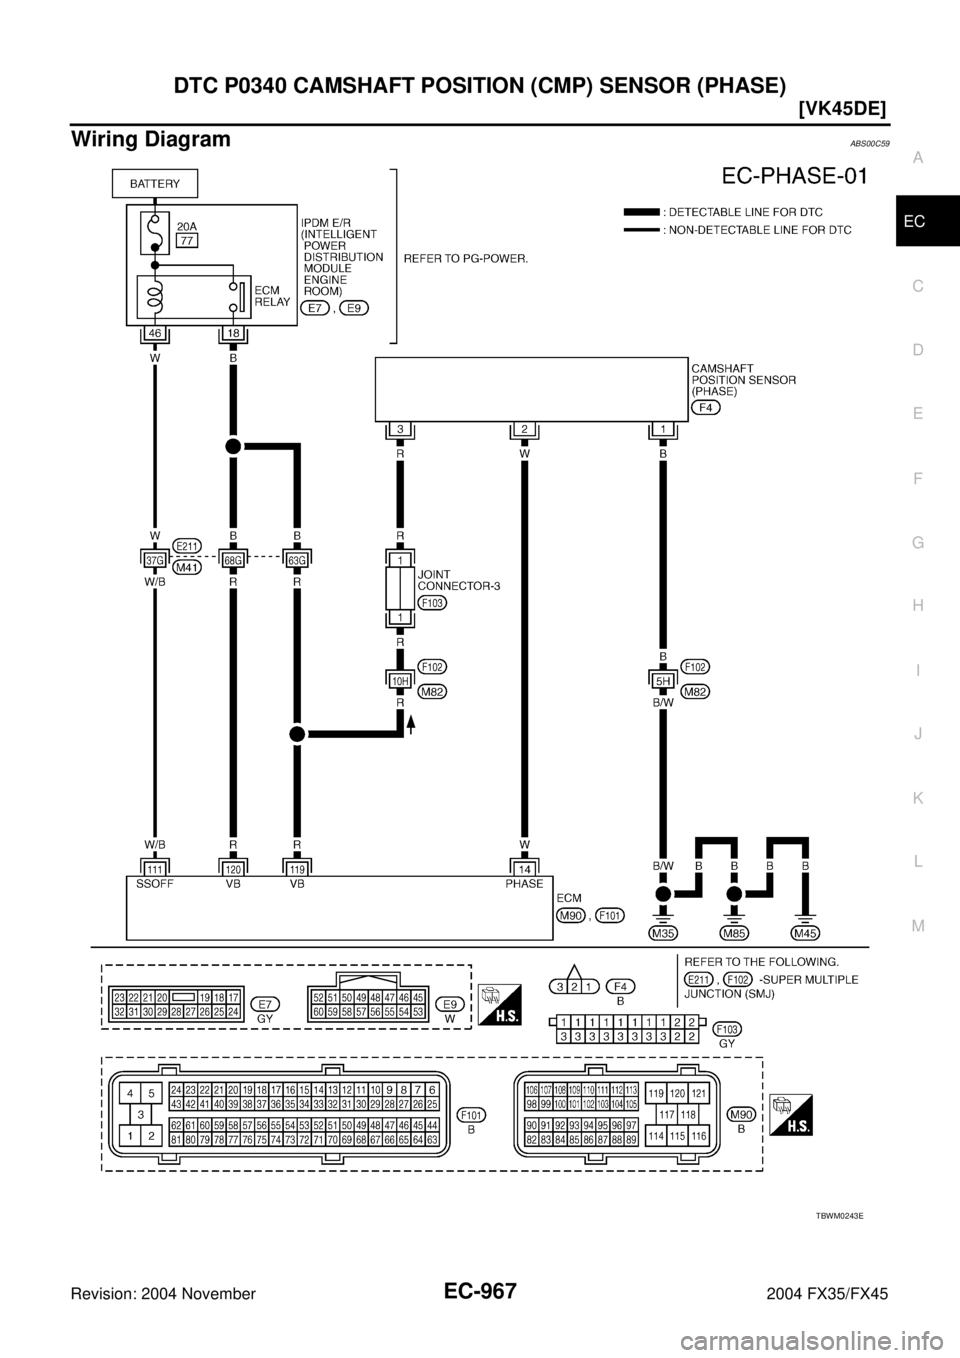 INFINITI FX35 2004  Service Manual DTC P0340 CAMSHAFT POSITION (CMP) SENSOR (PHASE)
EC-967
[VK45DE]
C
D
E
F
G
H
I
J
K
L
MA
EC
Revision: 2004 November 2004 FX35/FX45
Wiring DiagramABS00C59
TBWM0243E 